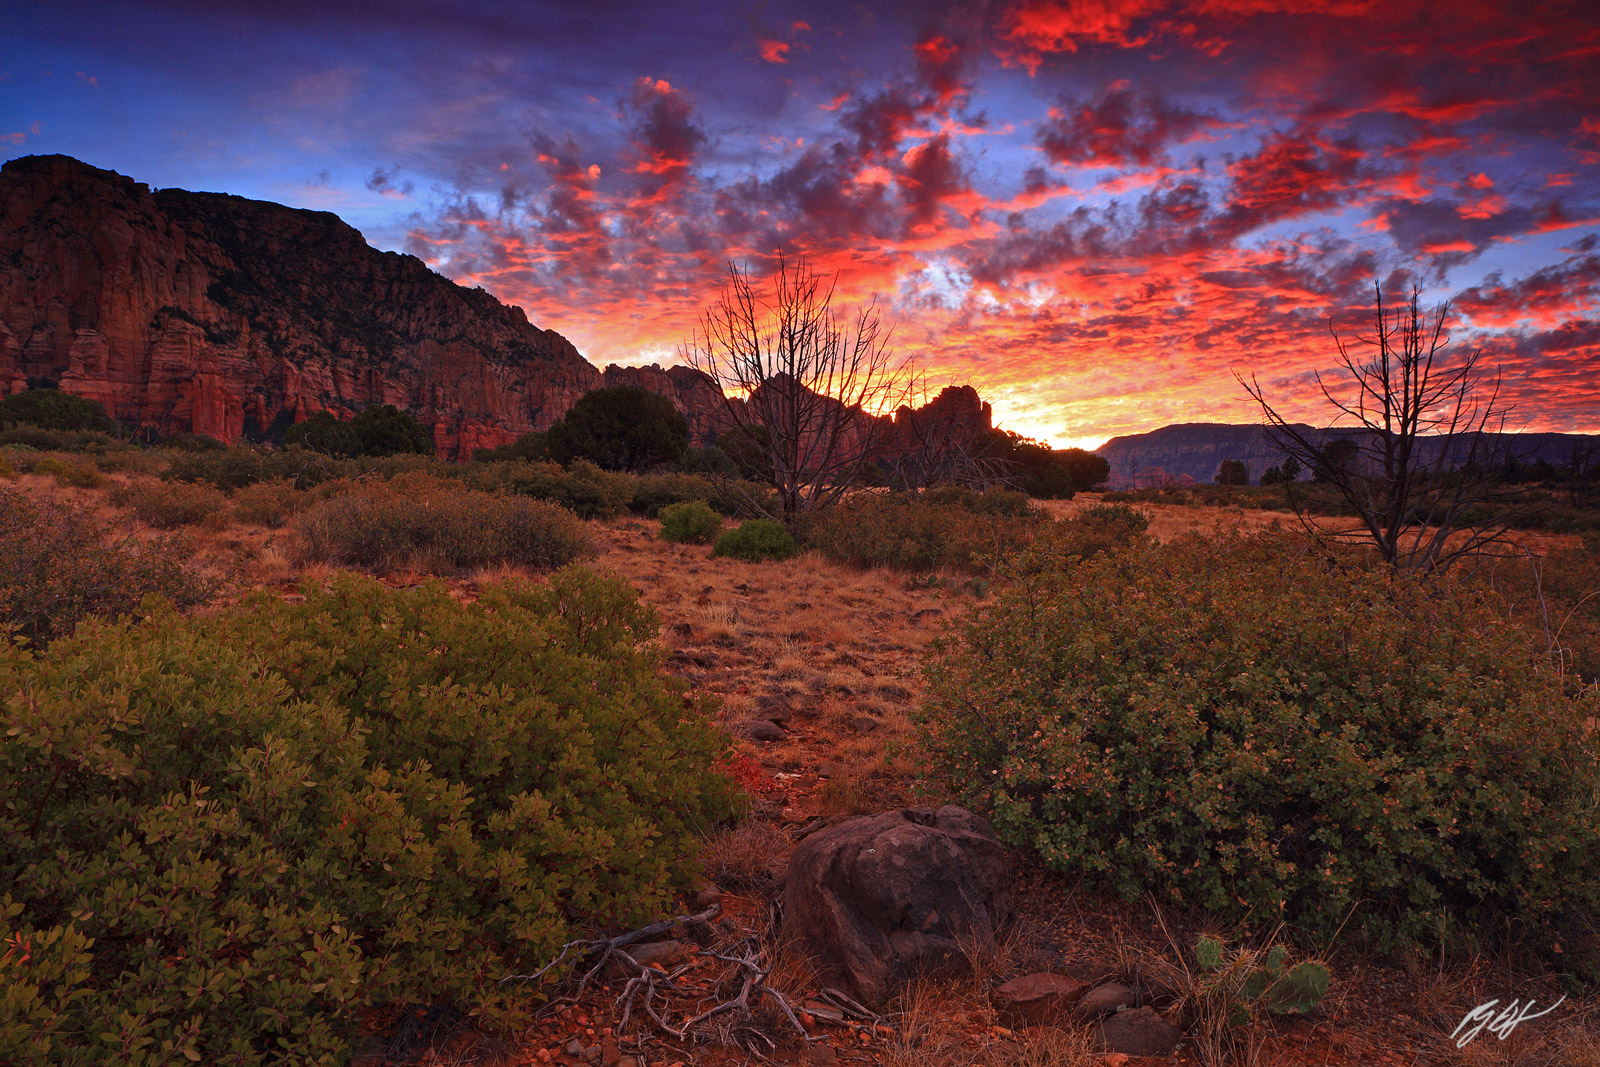 Sunrise Lights up the Sky in the Red Rock Mountain Secret Wilderness in Sedona, Arizona